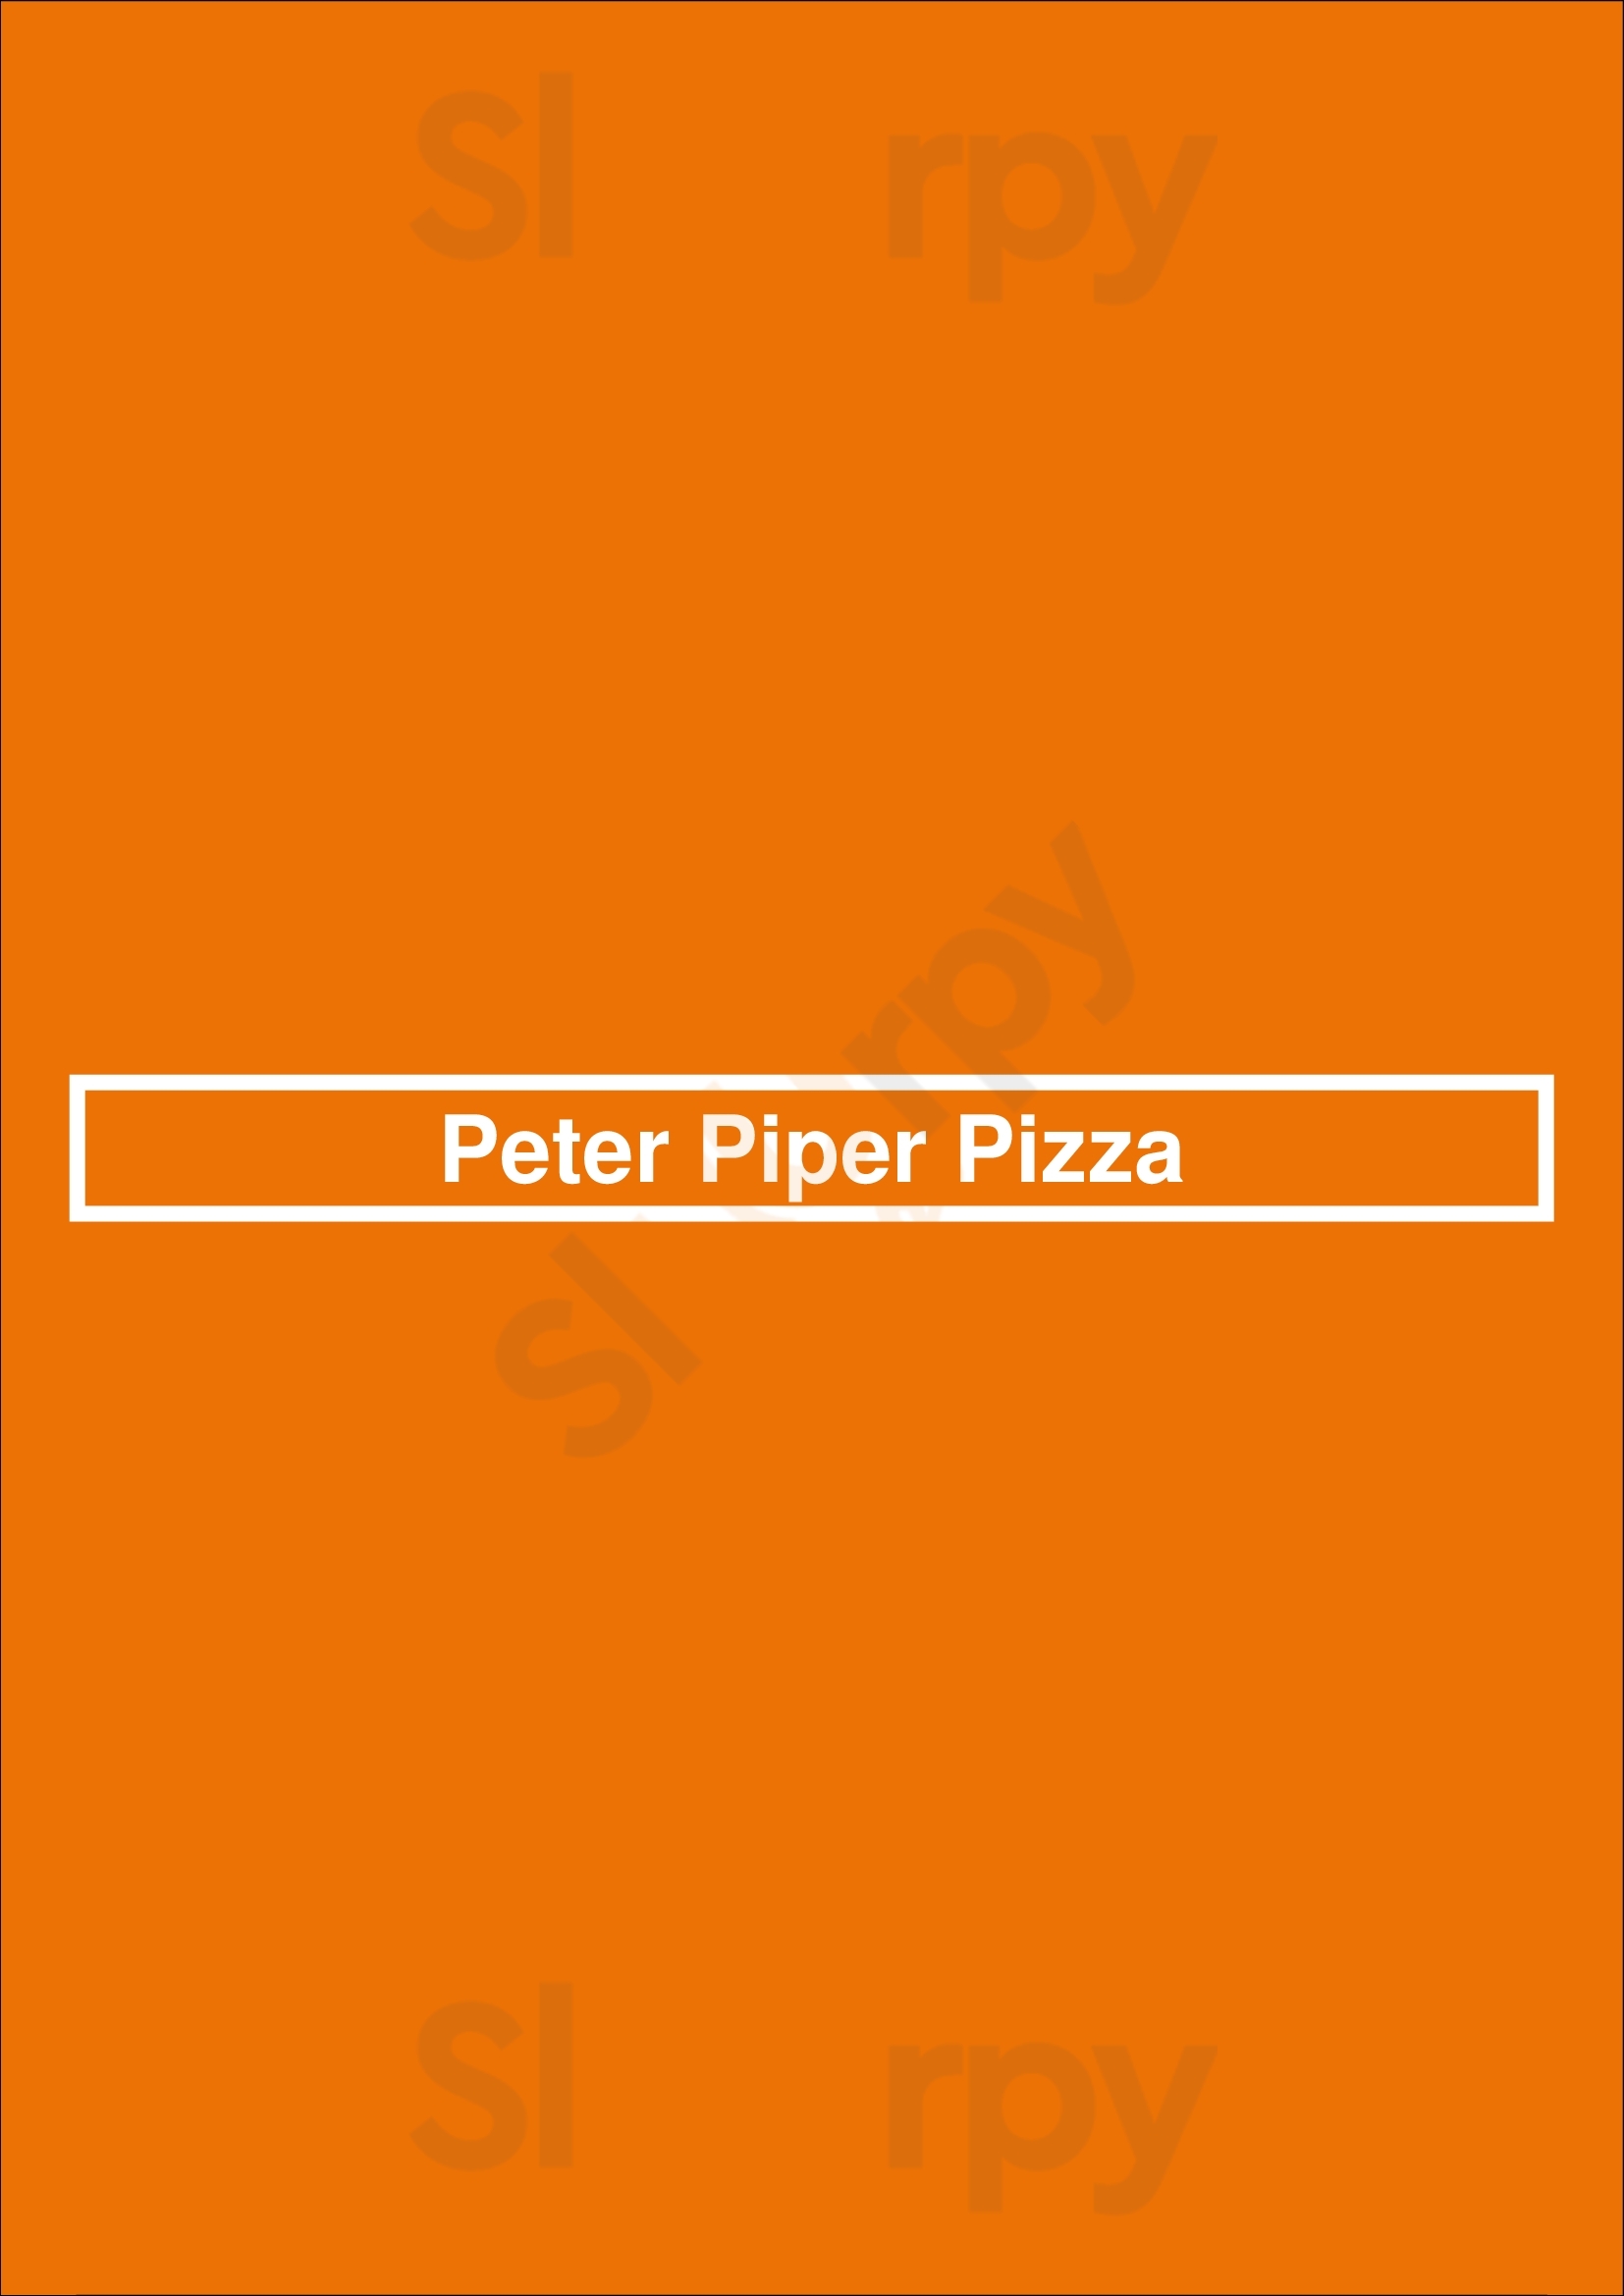 Peter Piper Pizza Mesa Menu - 1